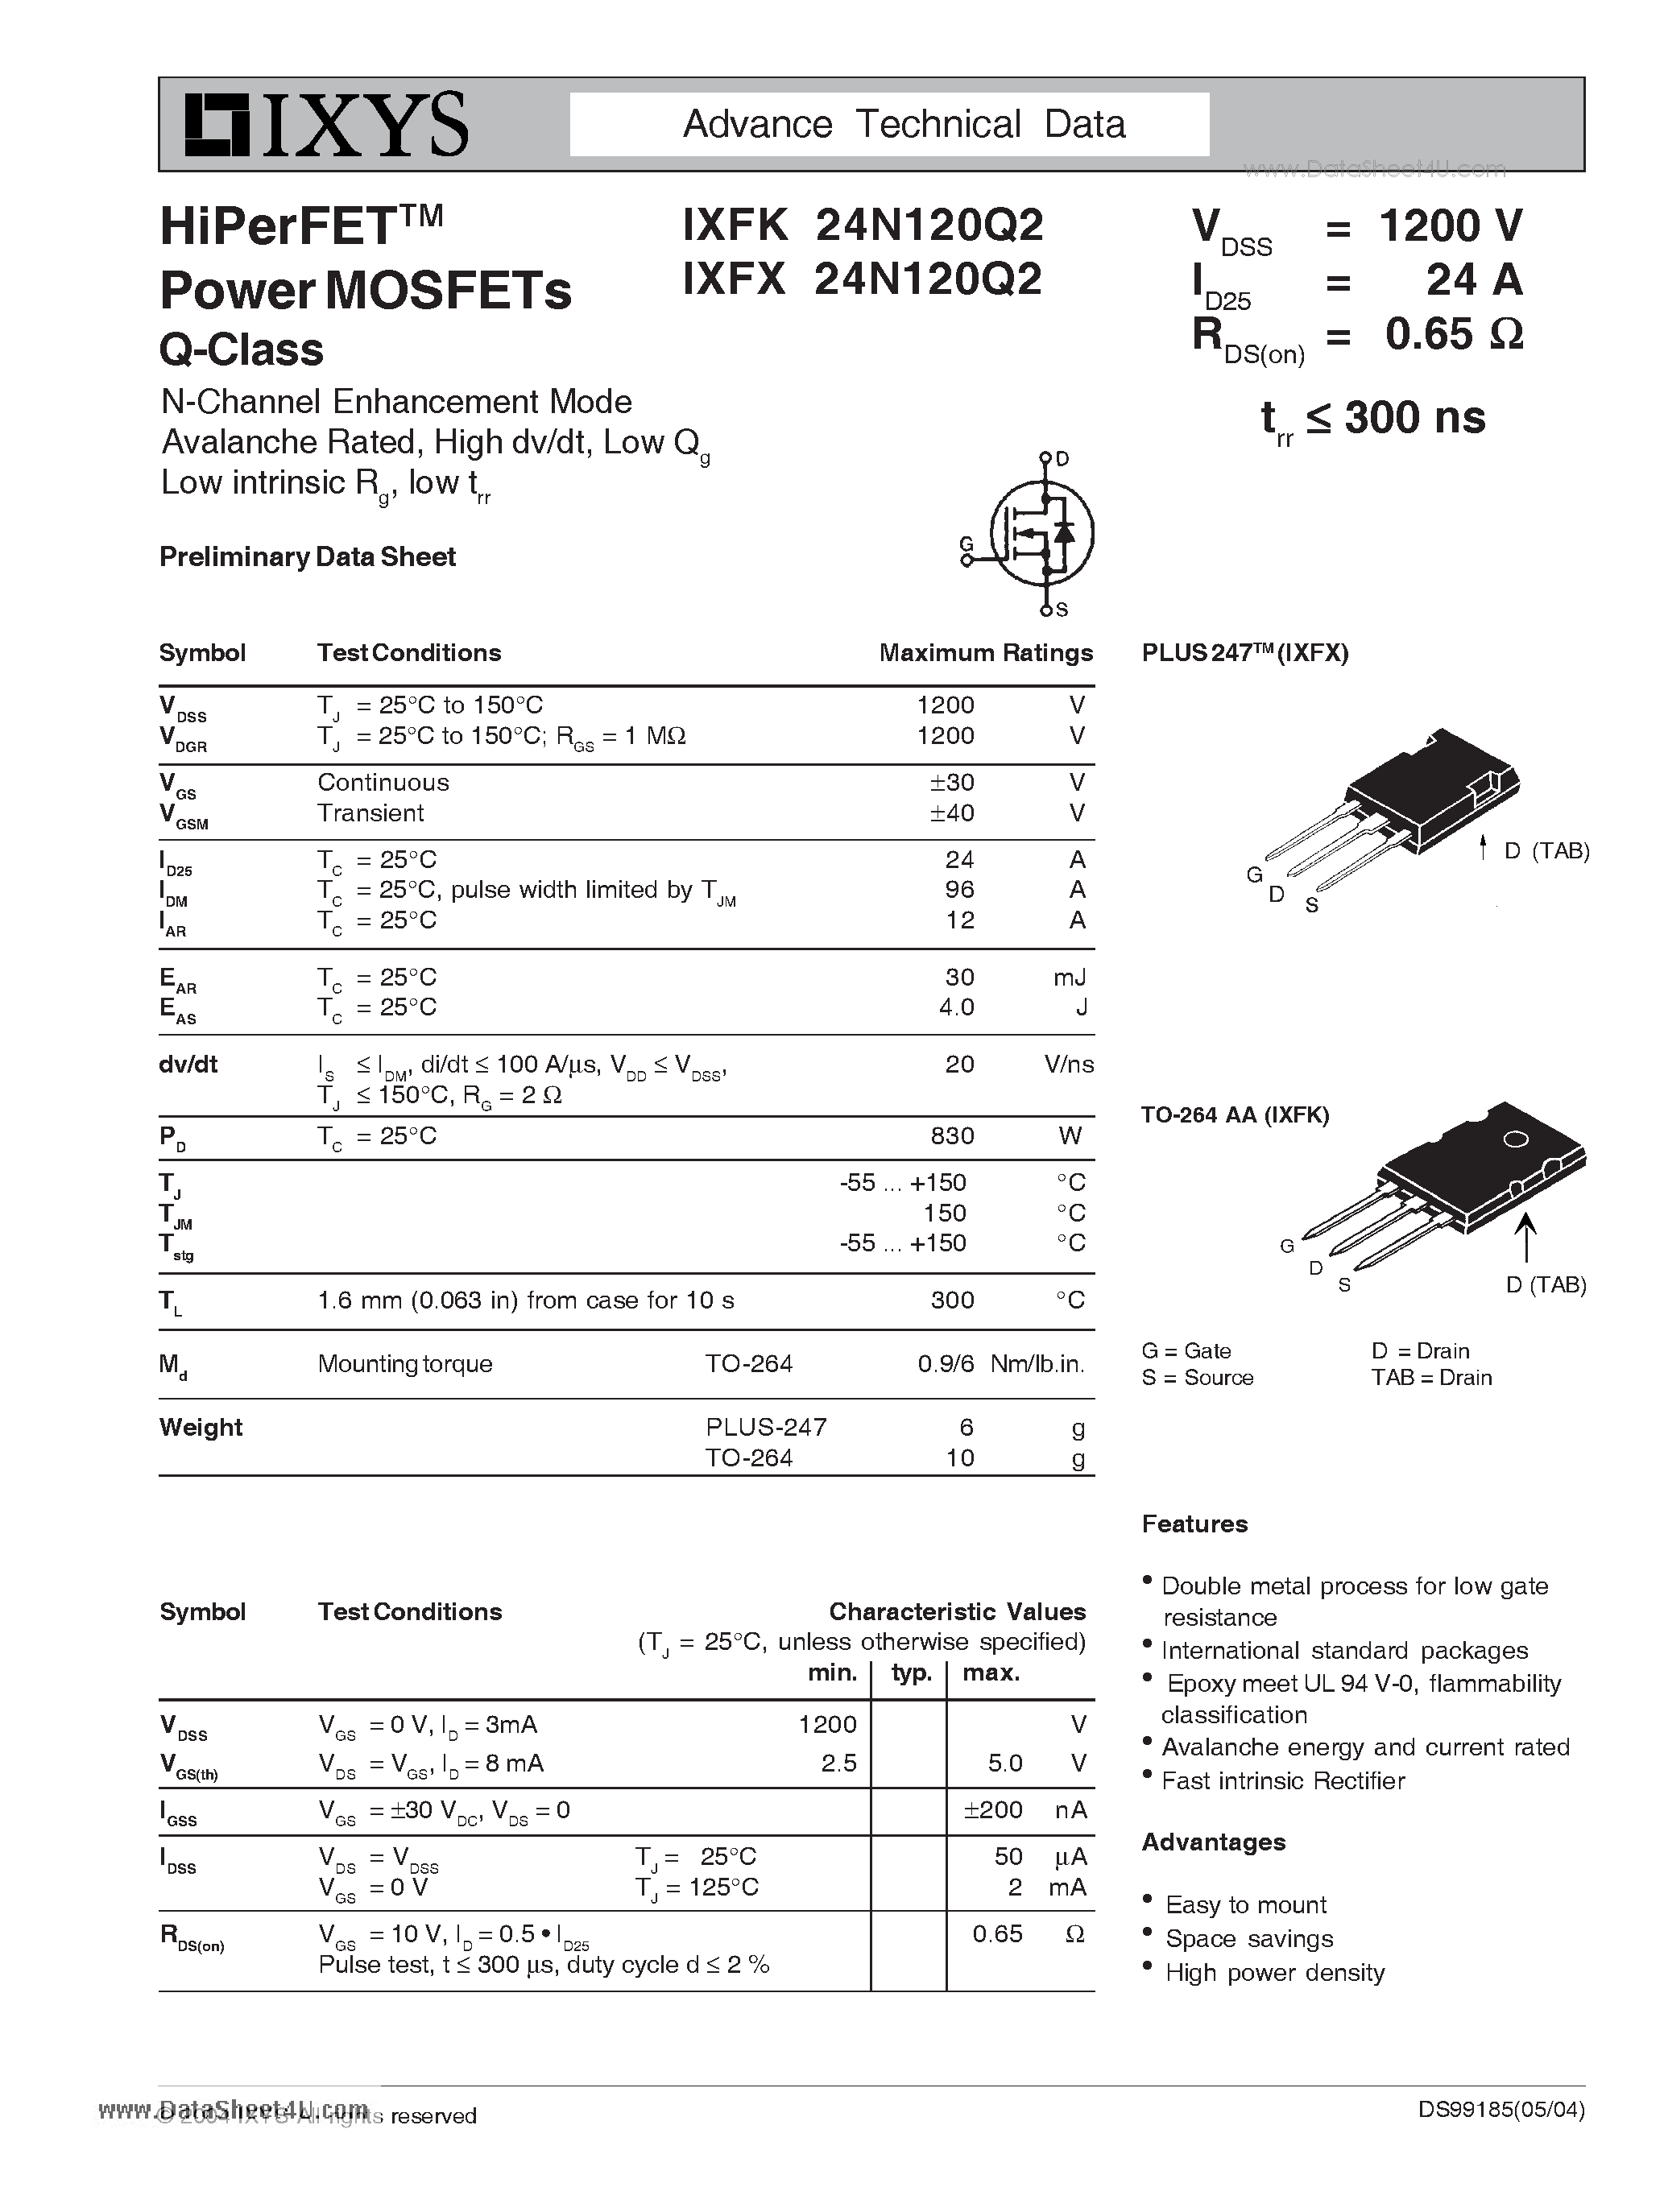 Datasheet IXFK24N120Q2 - HiPerFET Power MOSFETs Q-Class page 1